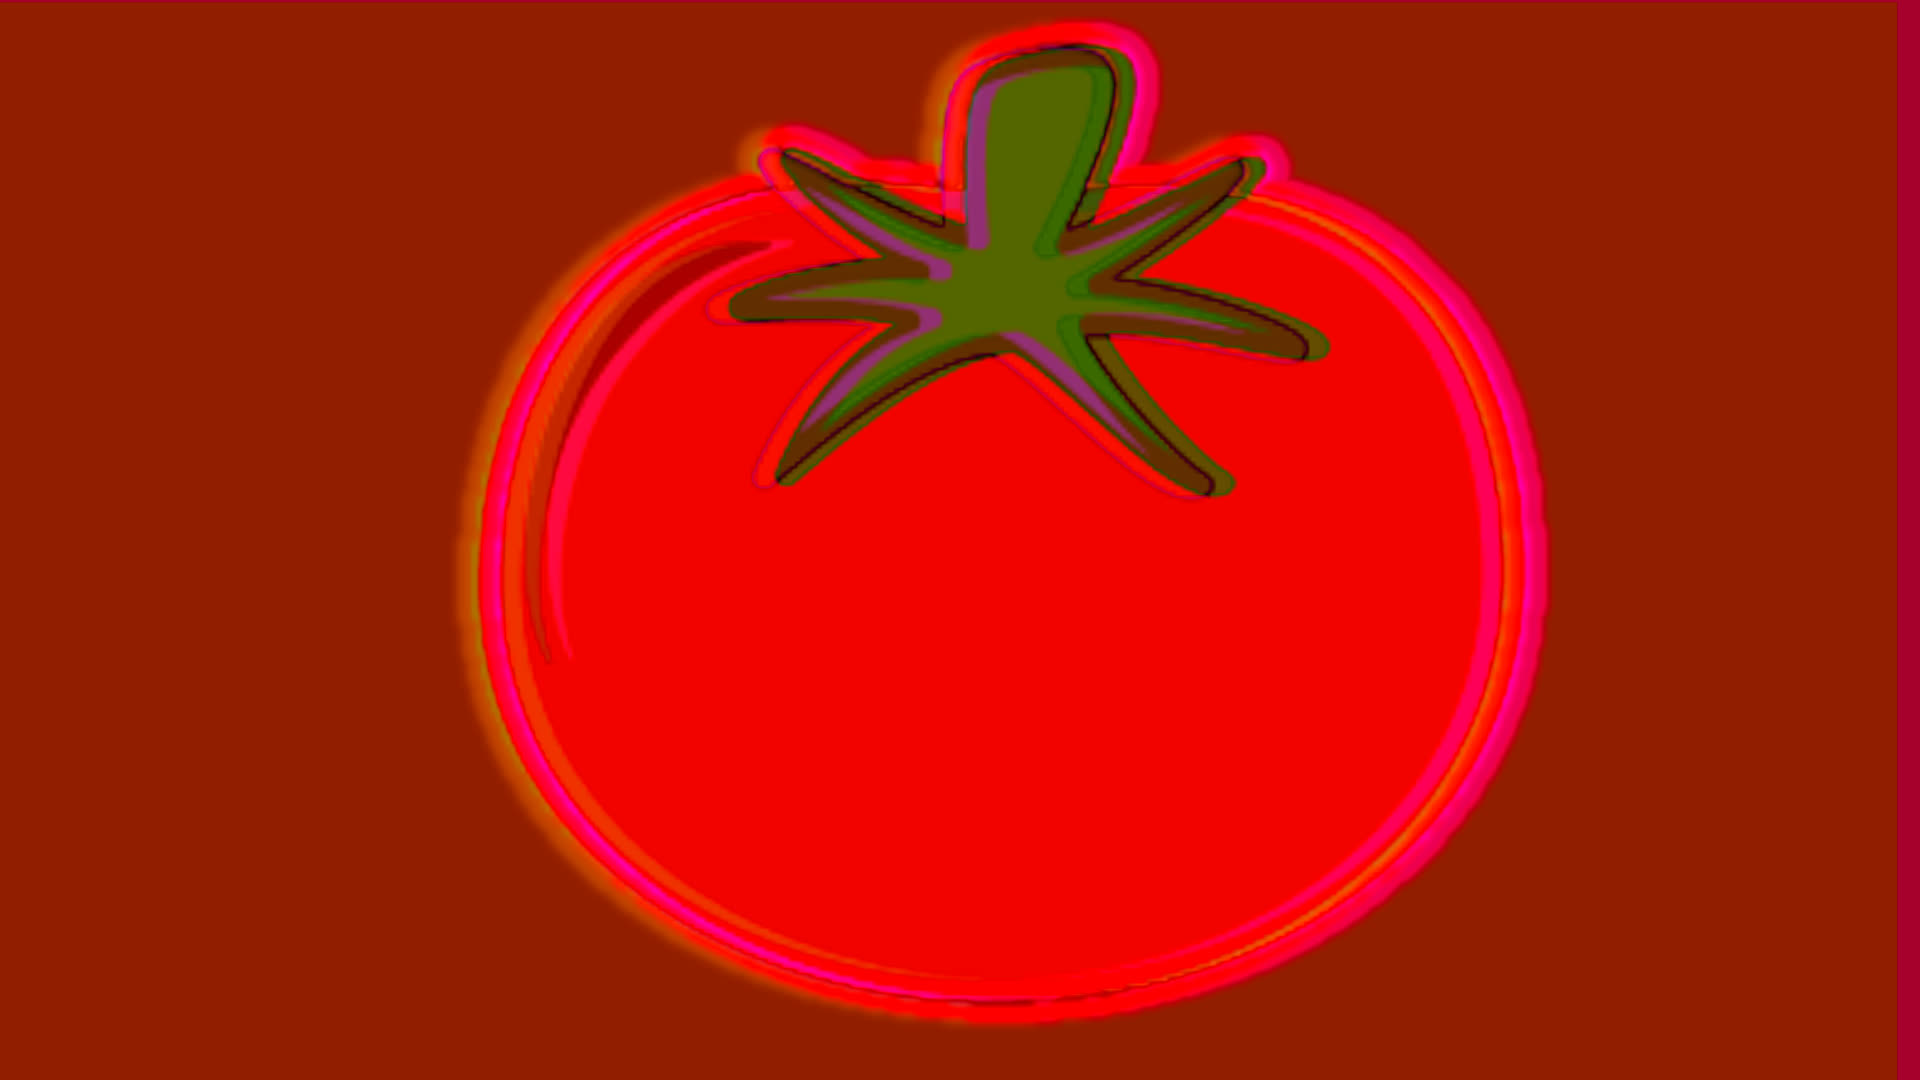 thursday recipe to create a tomato